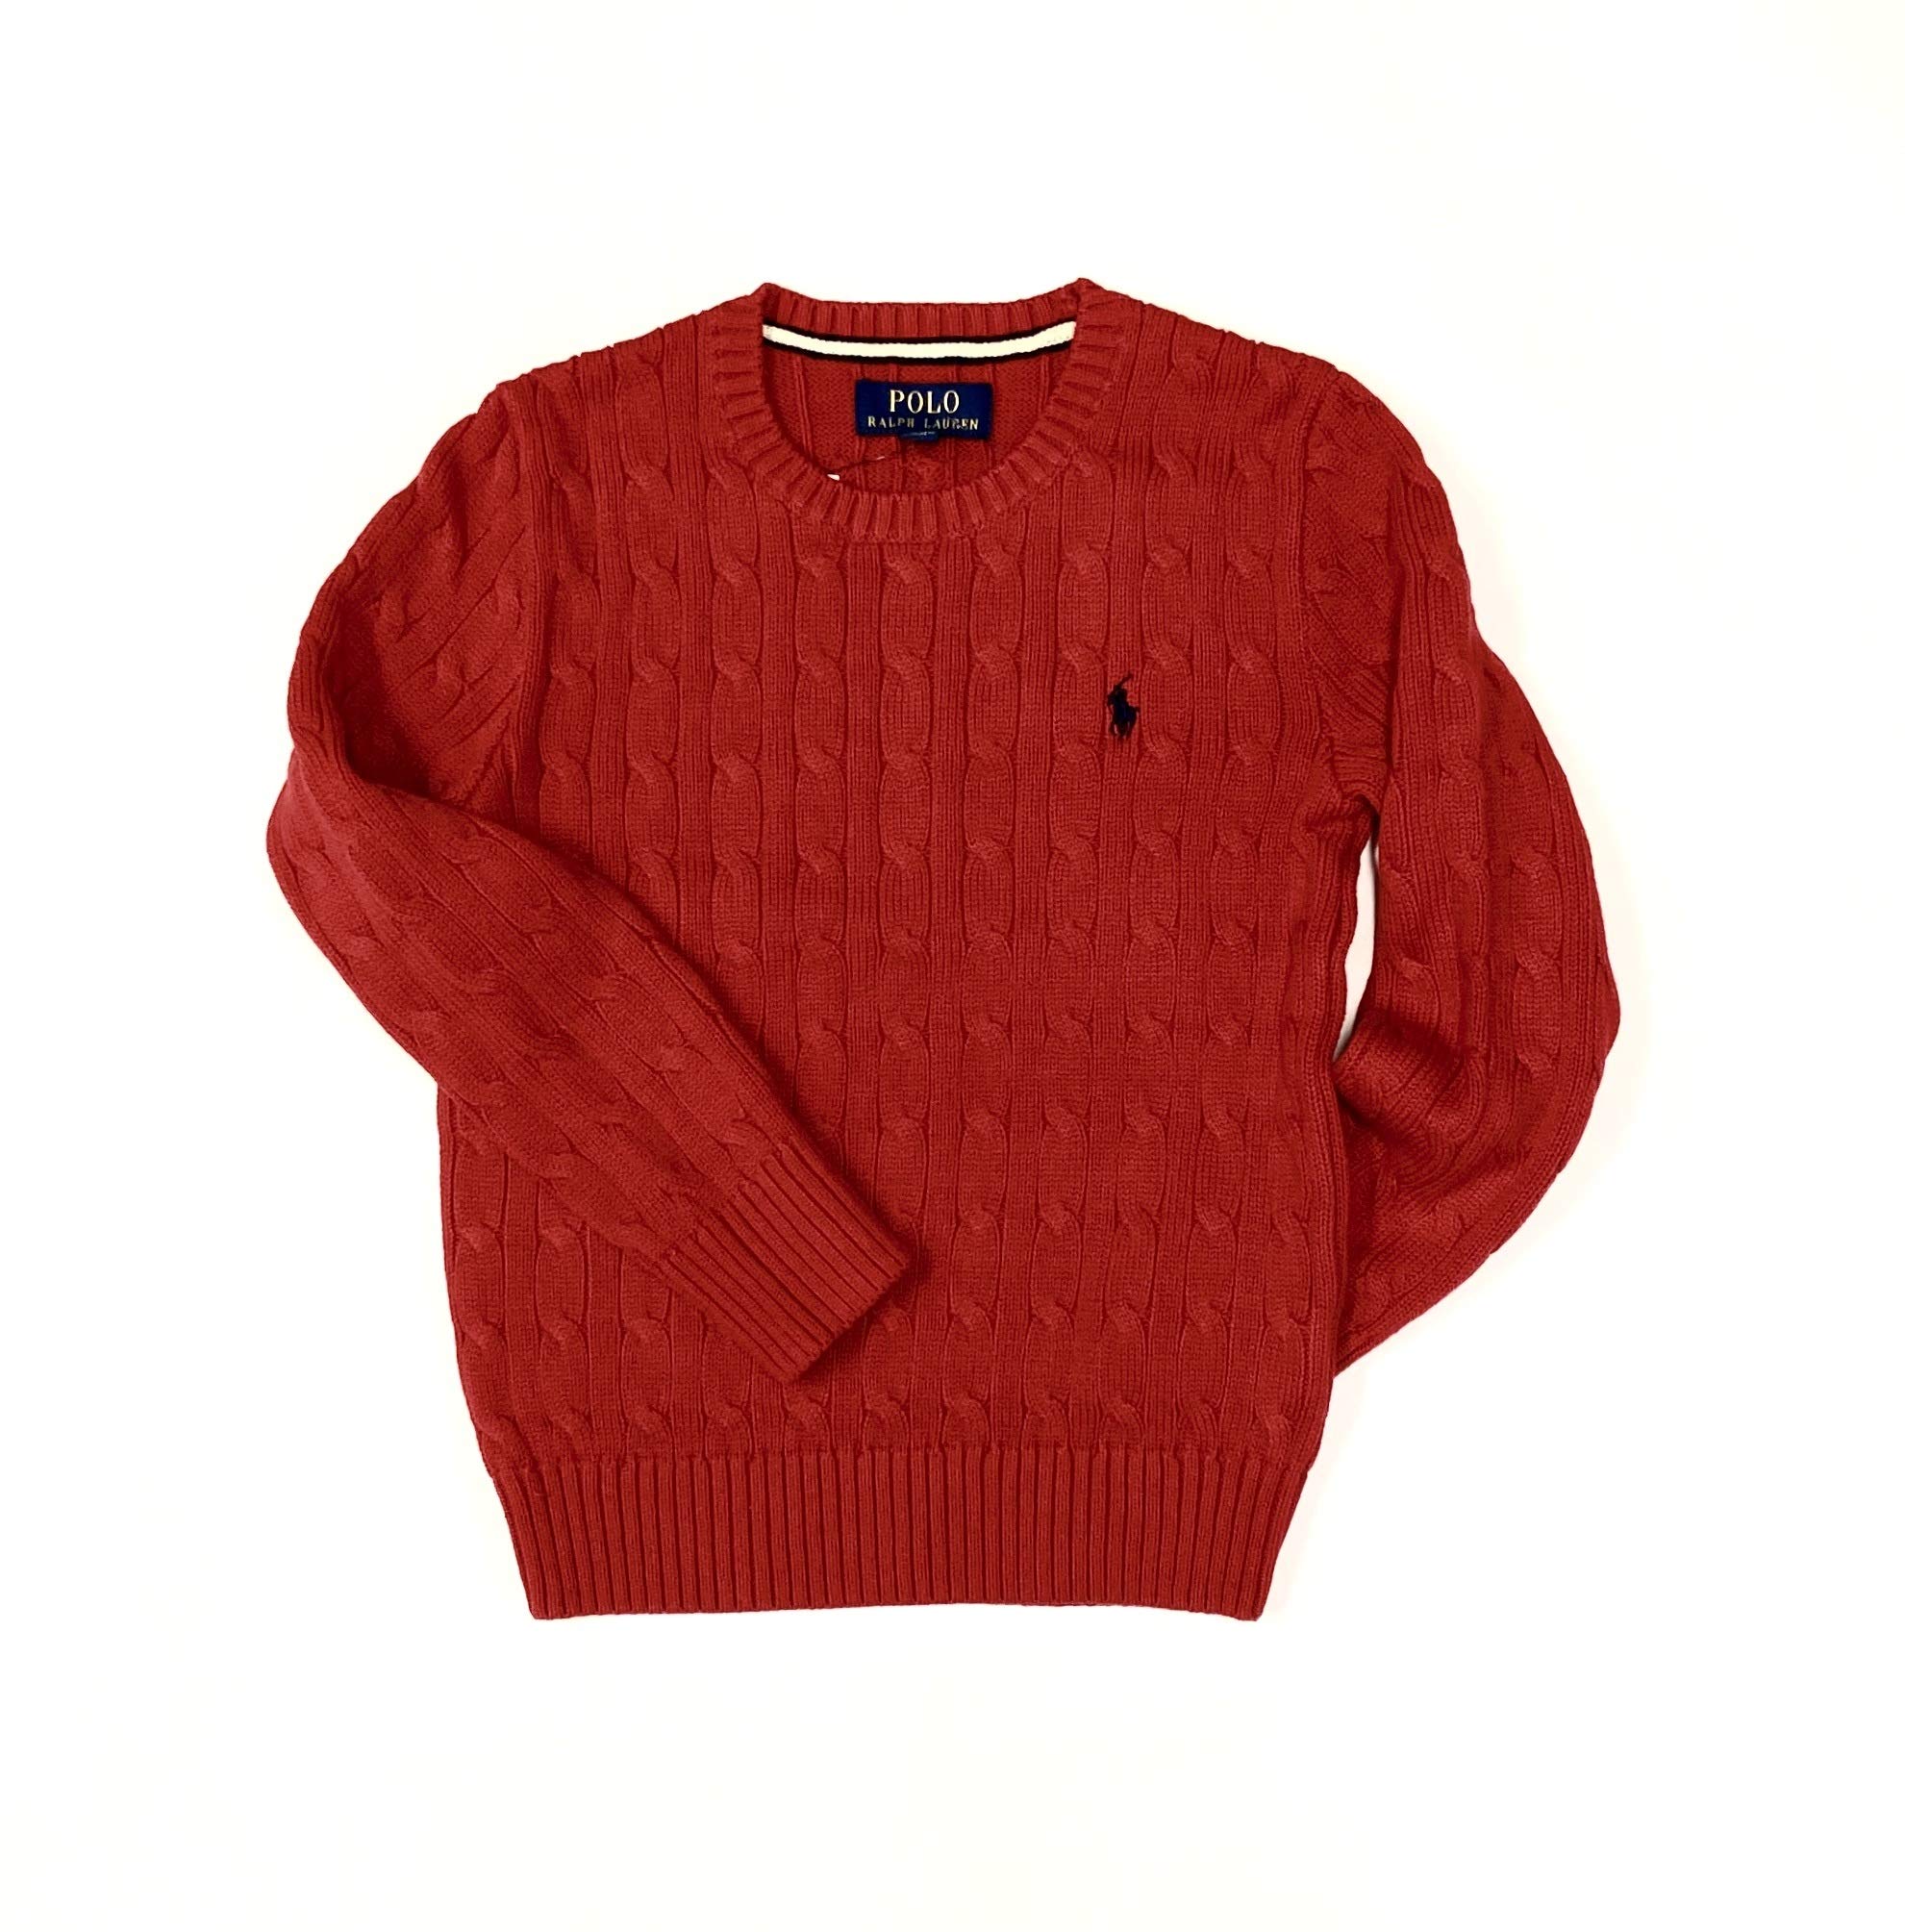 Mua Polo Ralph Lauren Boy's Cable-Knit Crewneck Sweater trên Amazon Mỹ  chính hãng 2023 | Giaonhan247